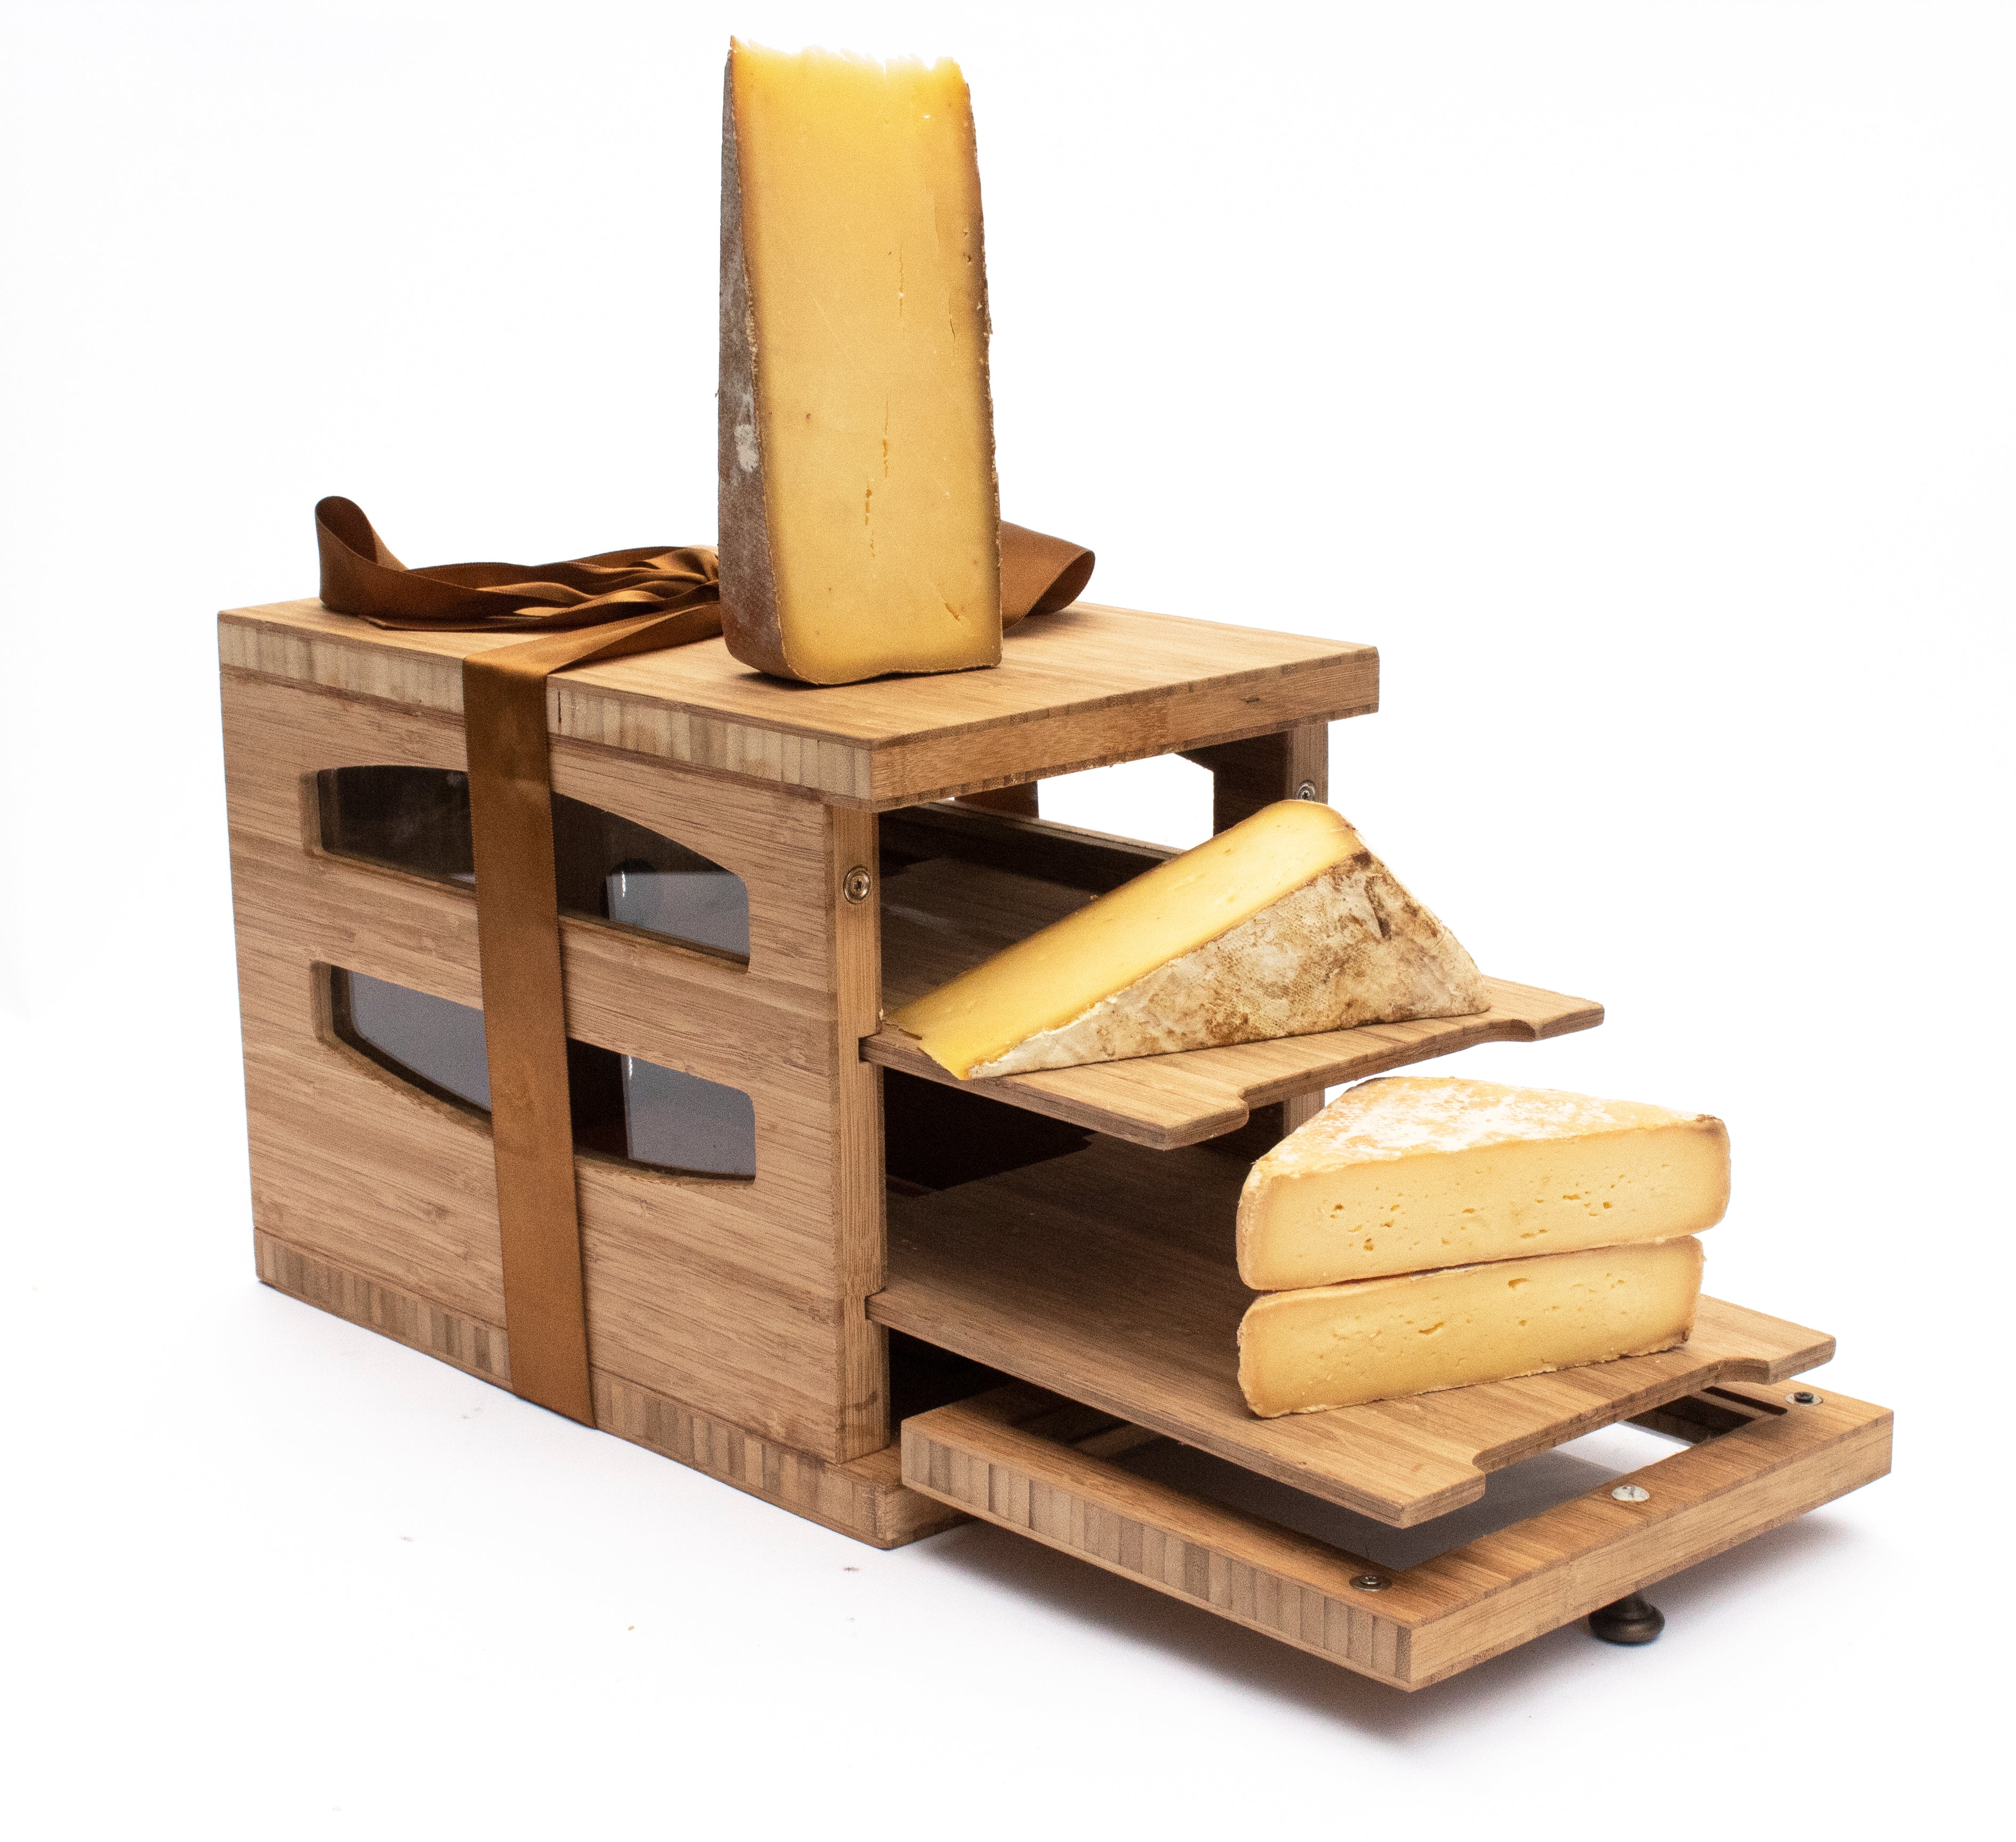 Cheesemaking Kits — The Winemaker's Shop